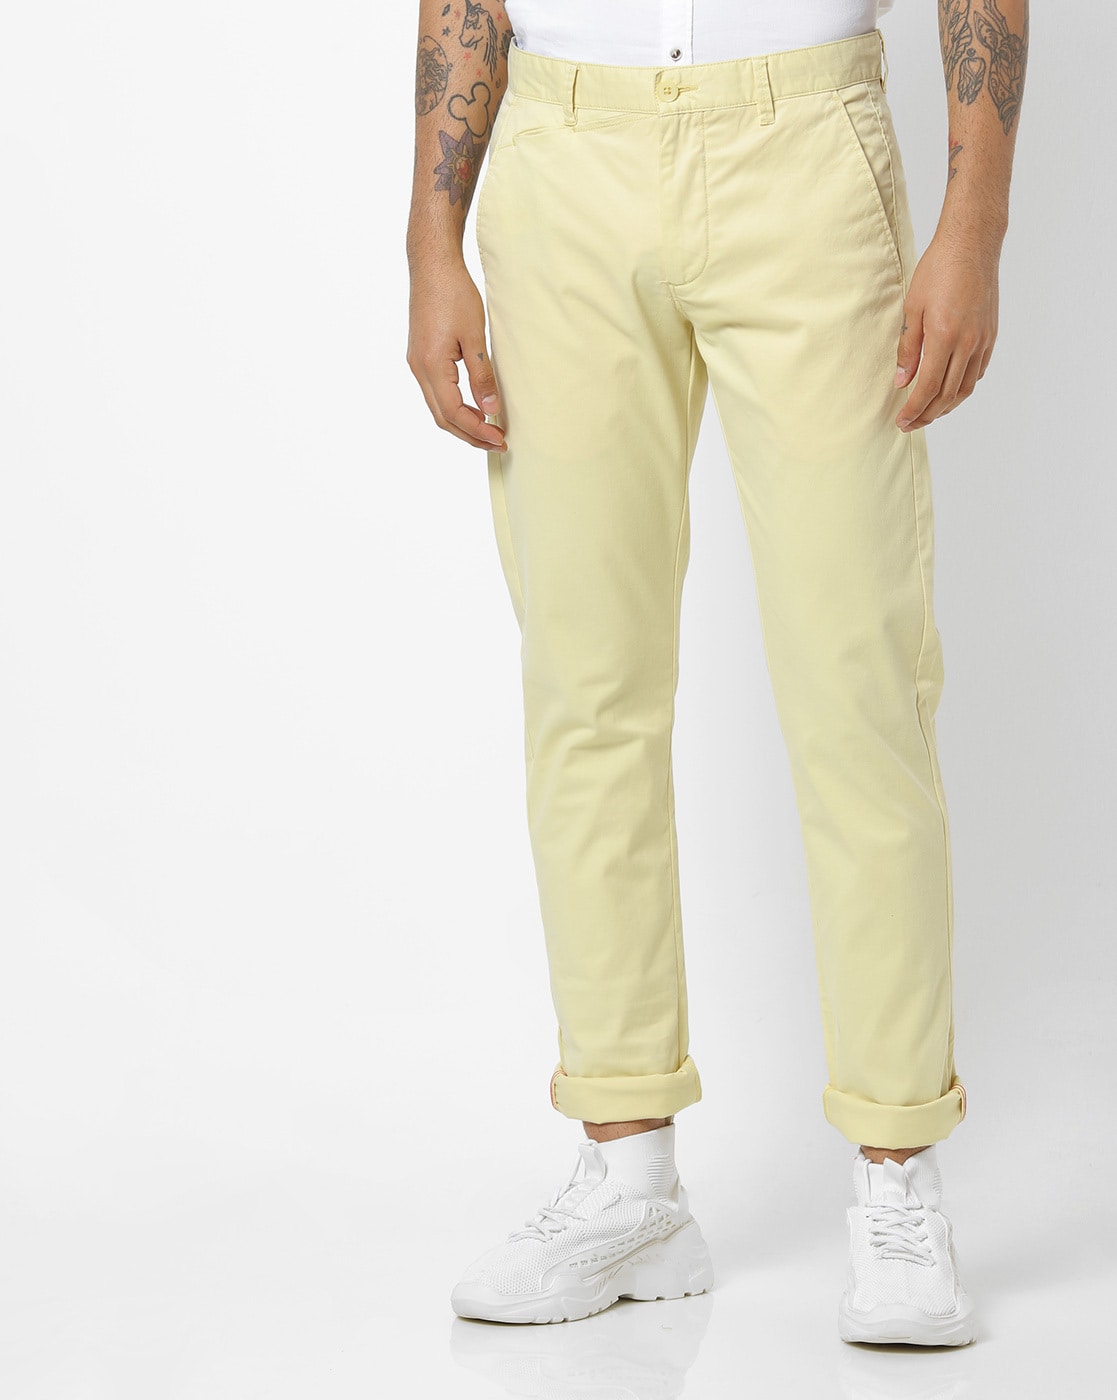 Buy Yellow Trousers  Pants for Men by hangup Online  Ajiocom